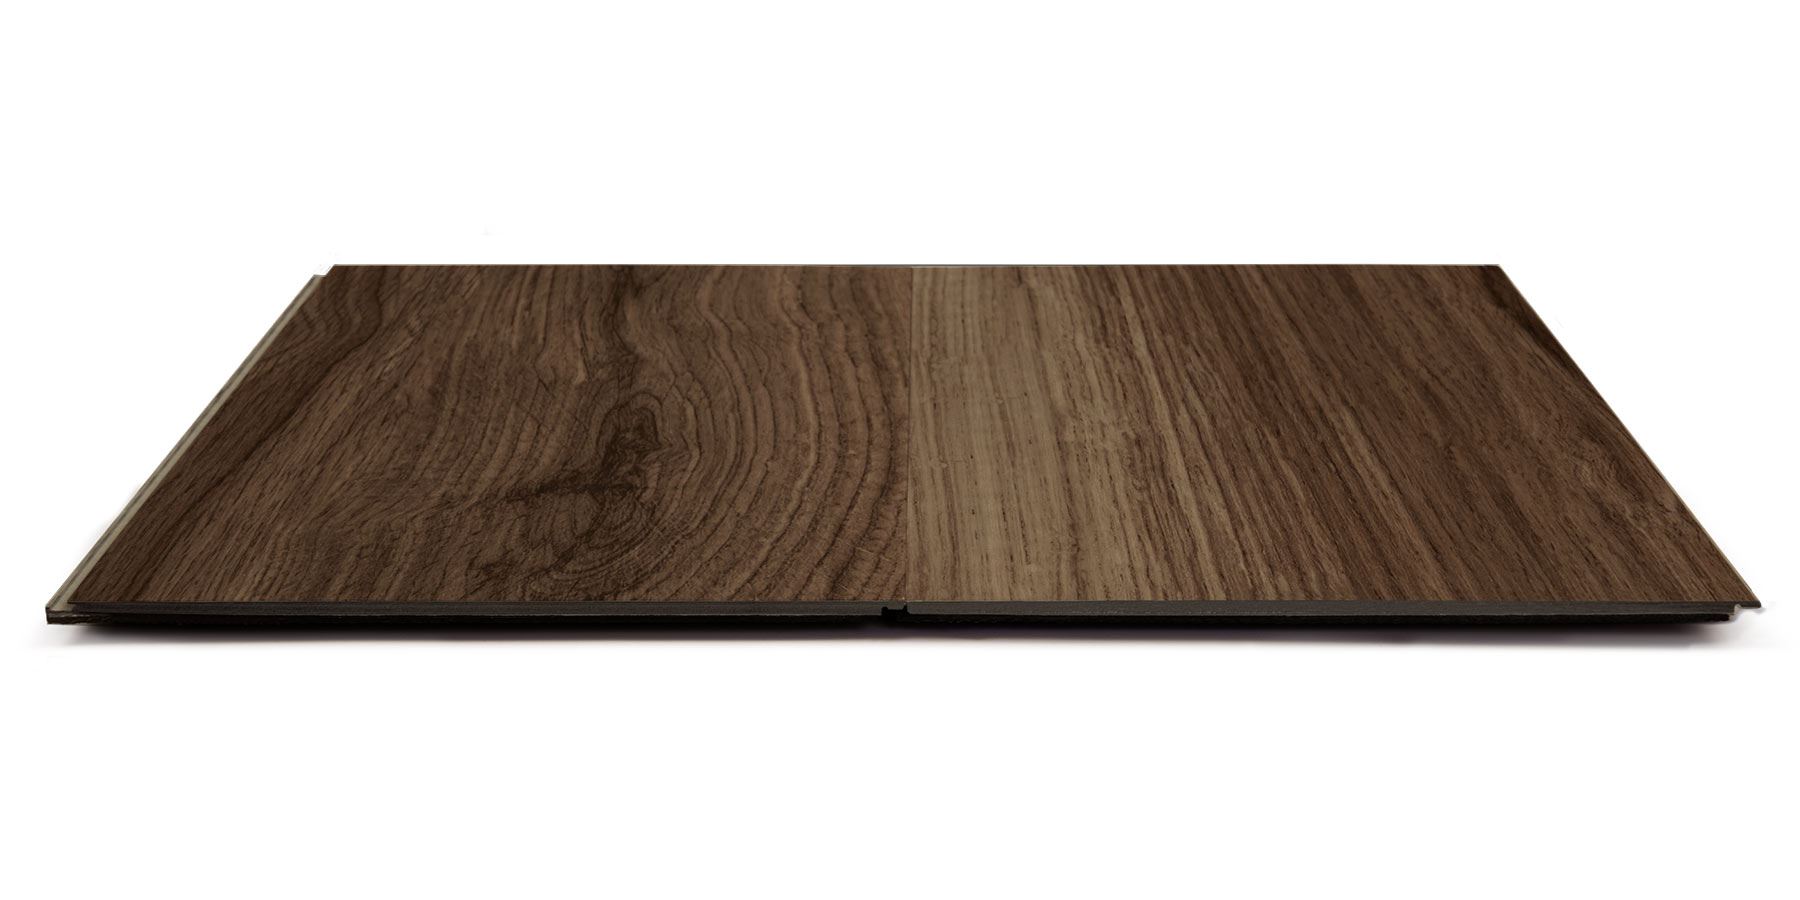 Northbrook Vinyl Plank Flooring